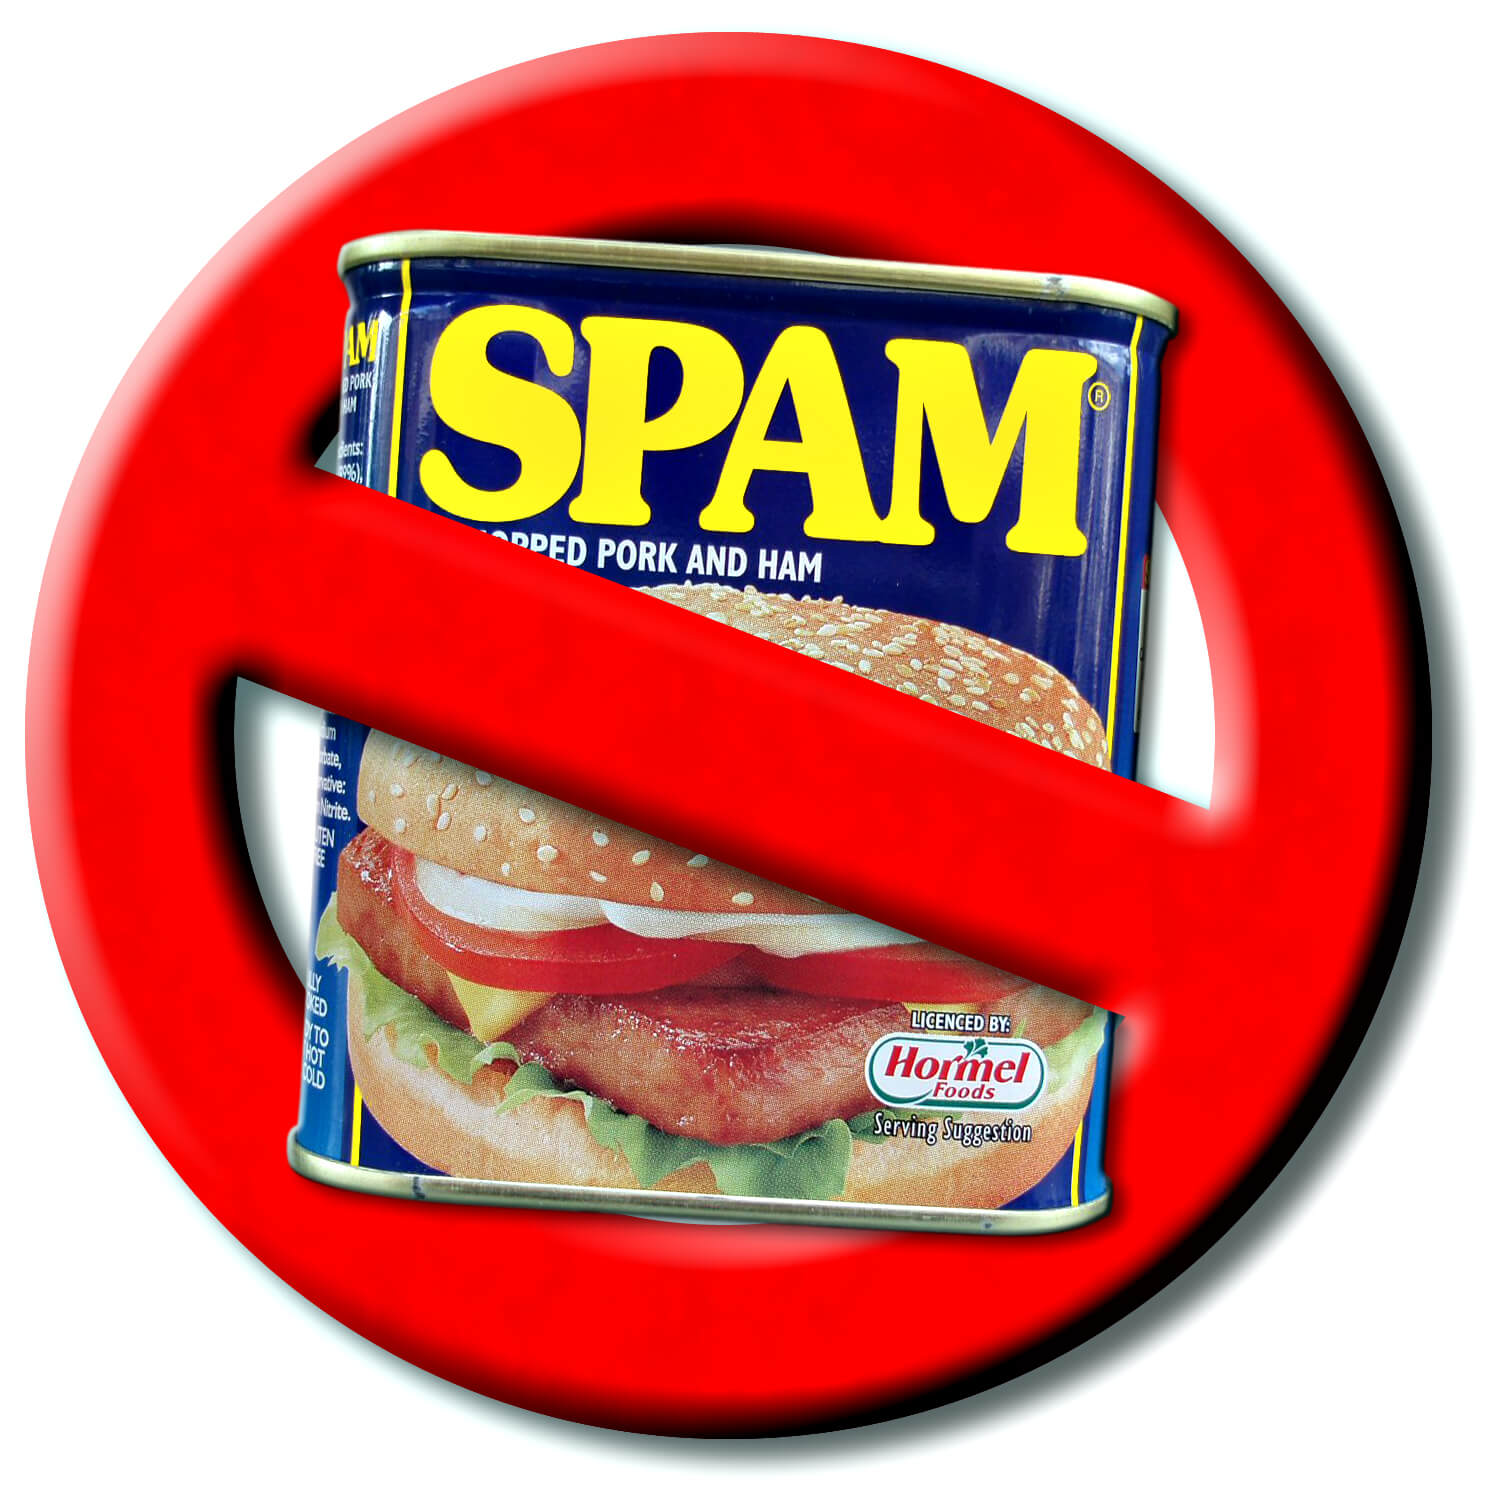 Формы спама. Спам. Реклама Spam. Реклама Spam ветчины. Спам консервы.